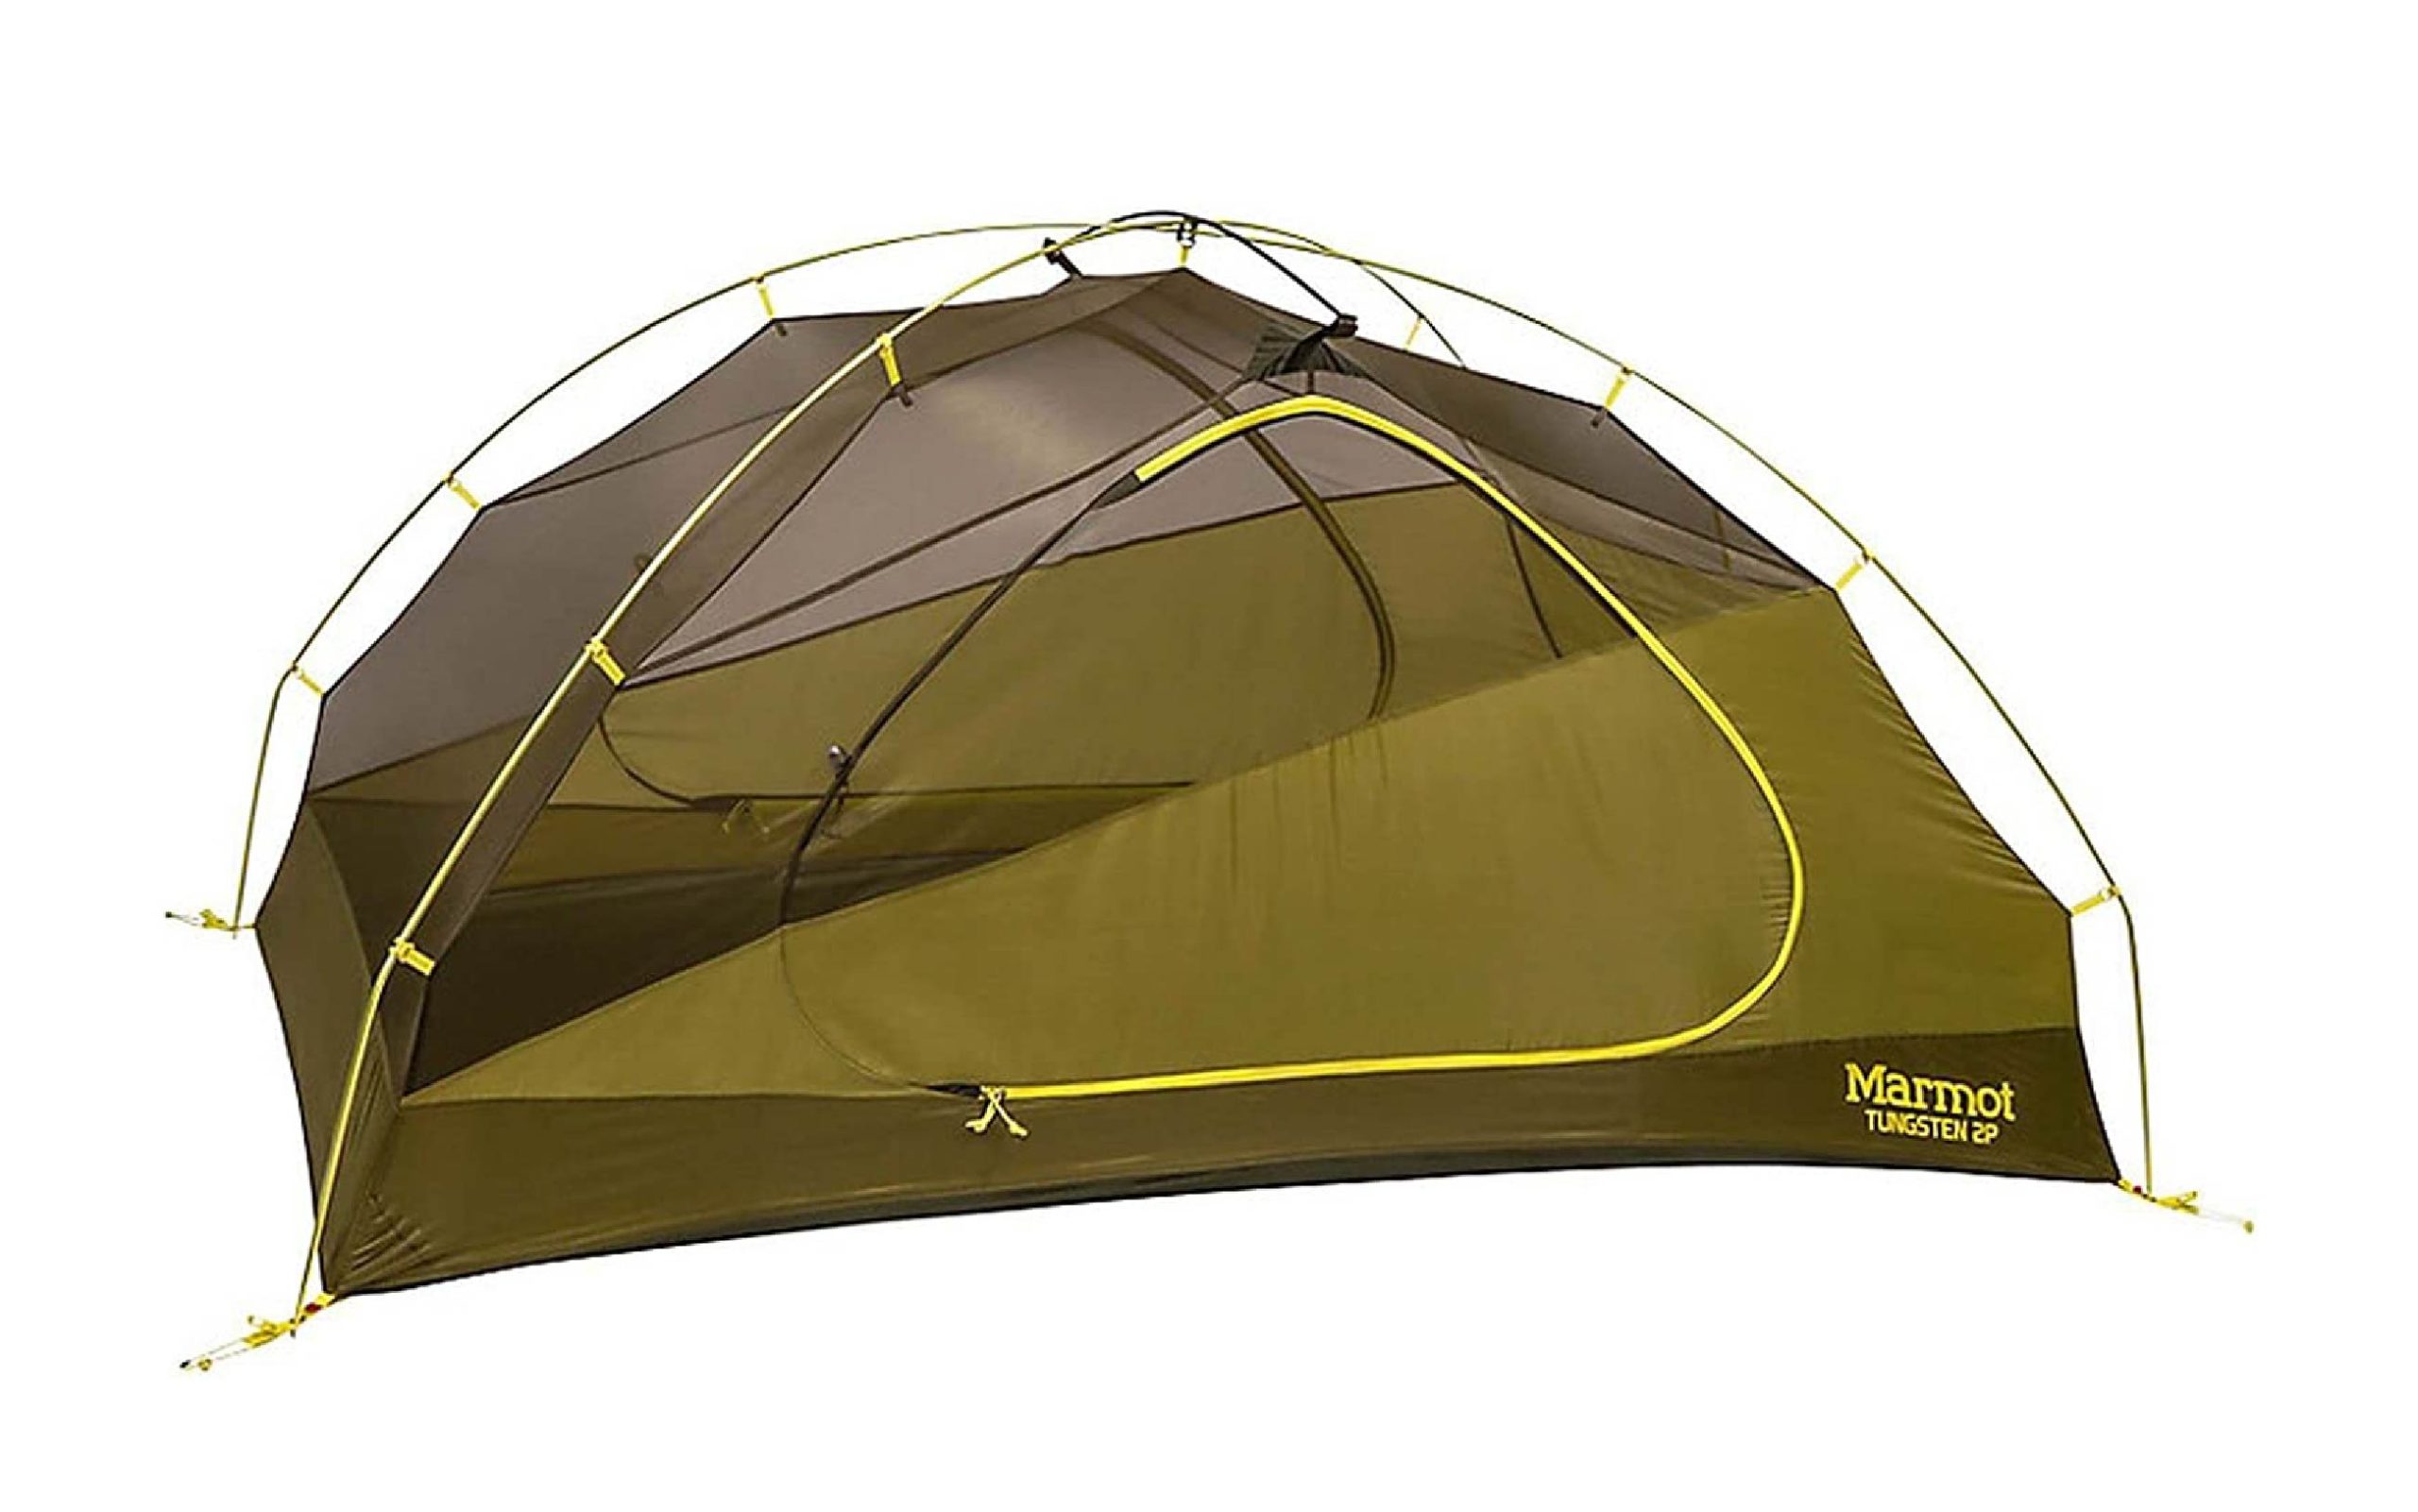 Marmot Tungsten 2P tent